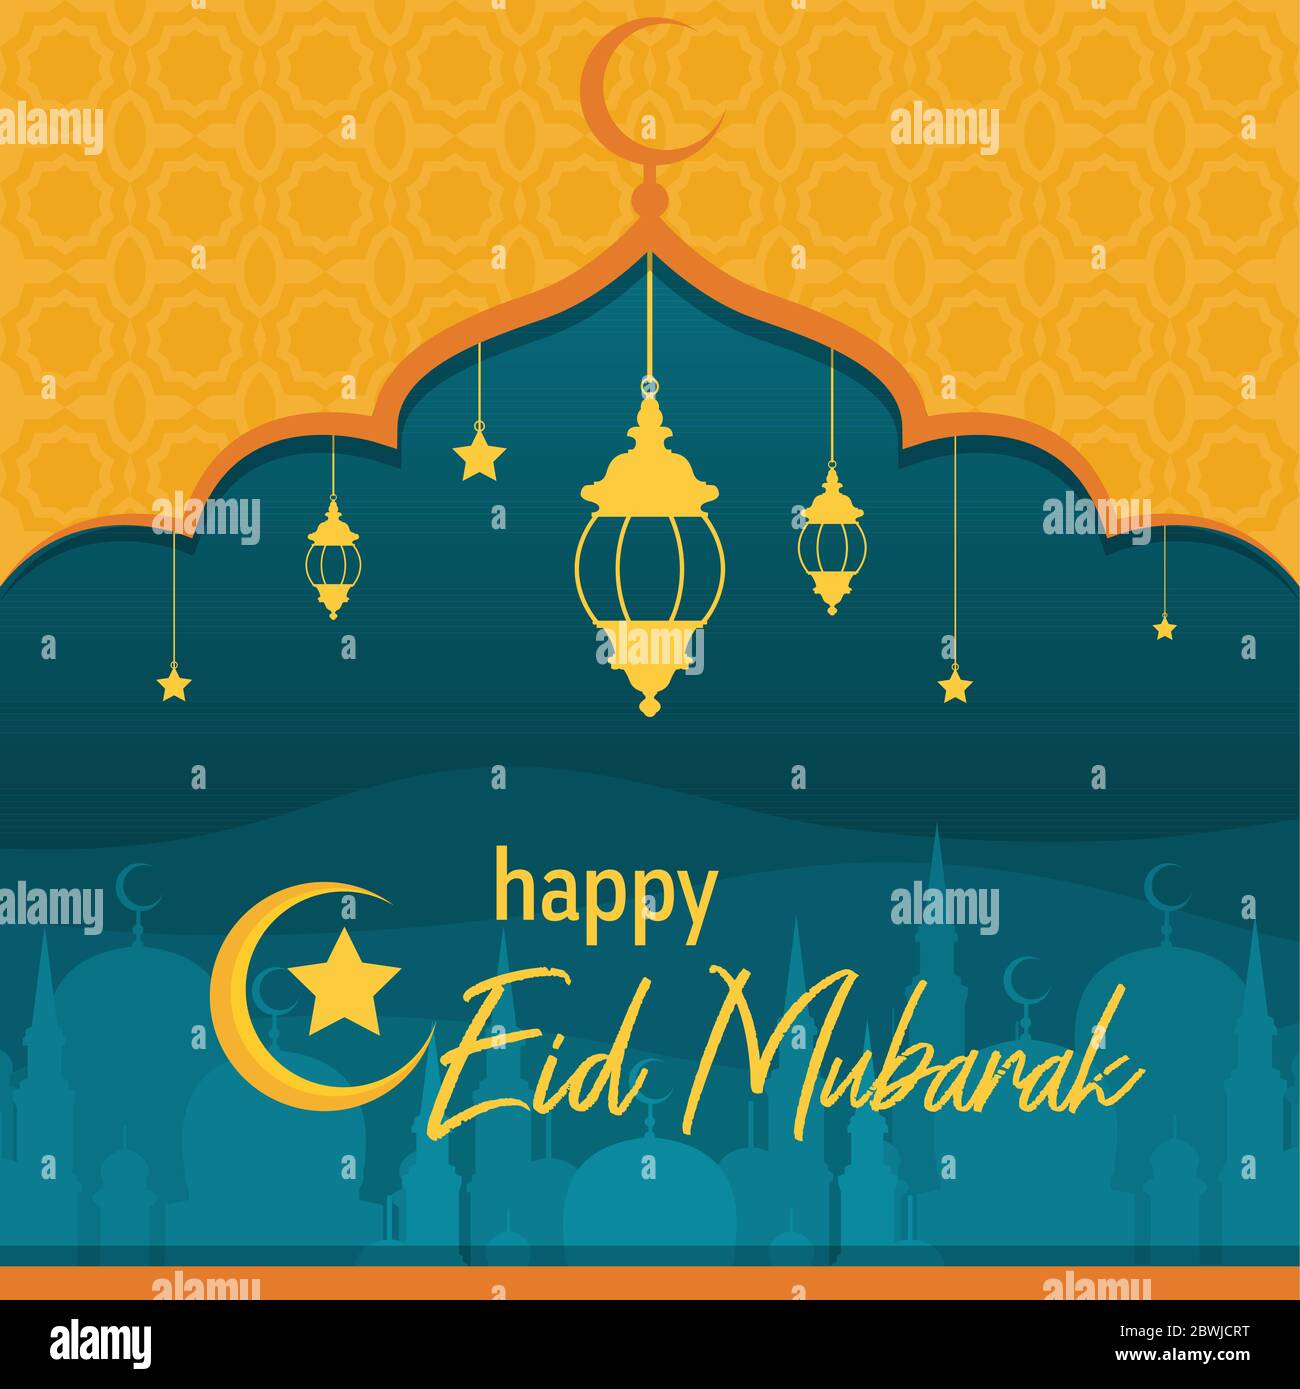 Mosque on Desert with Lantern Islamic Illustration of Happy Eid Mubarak Stock Vector